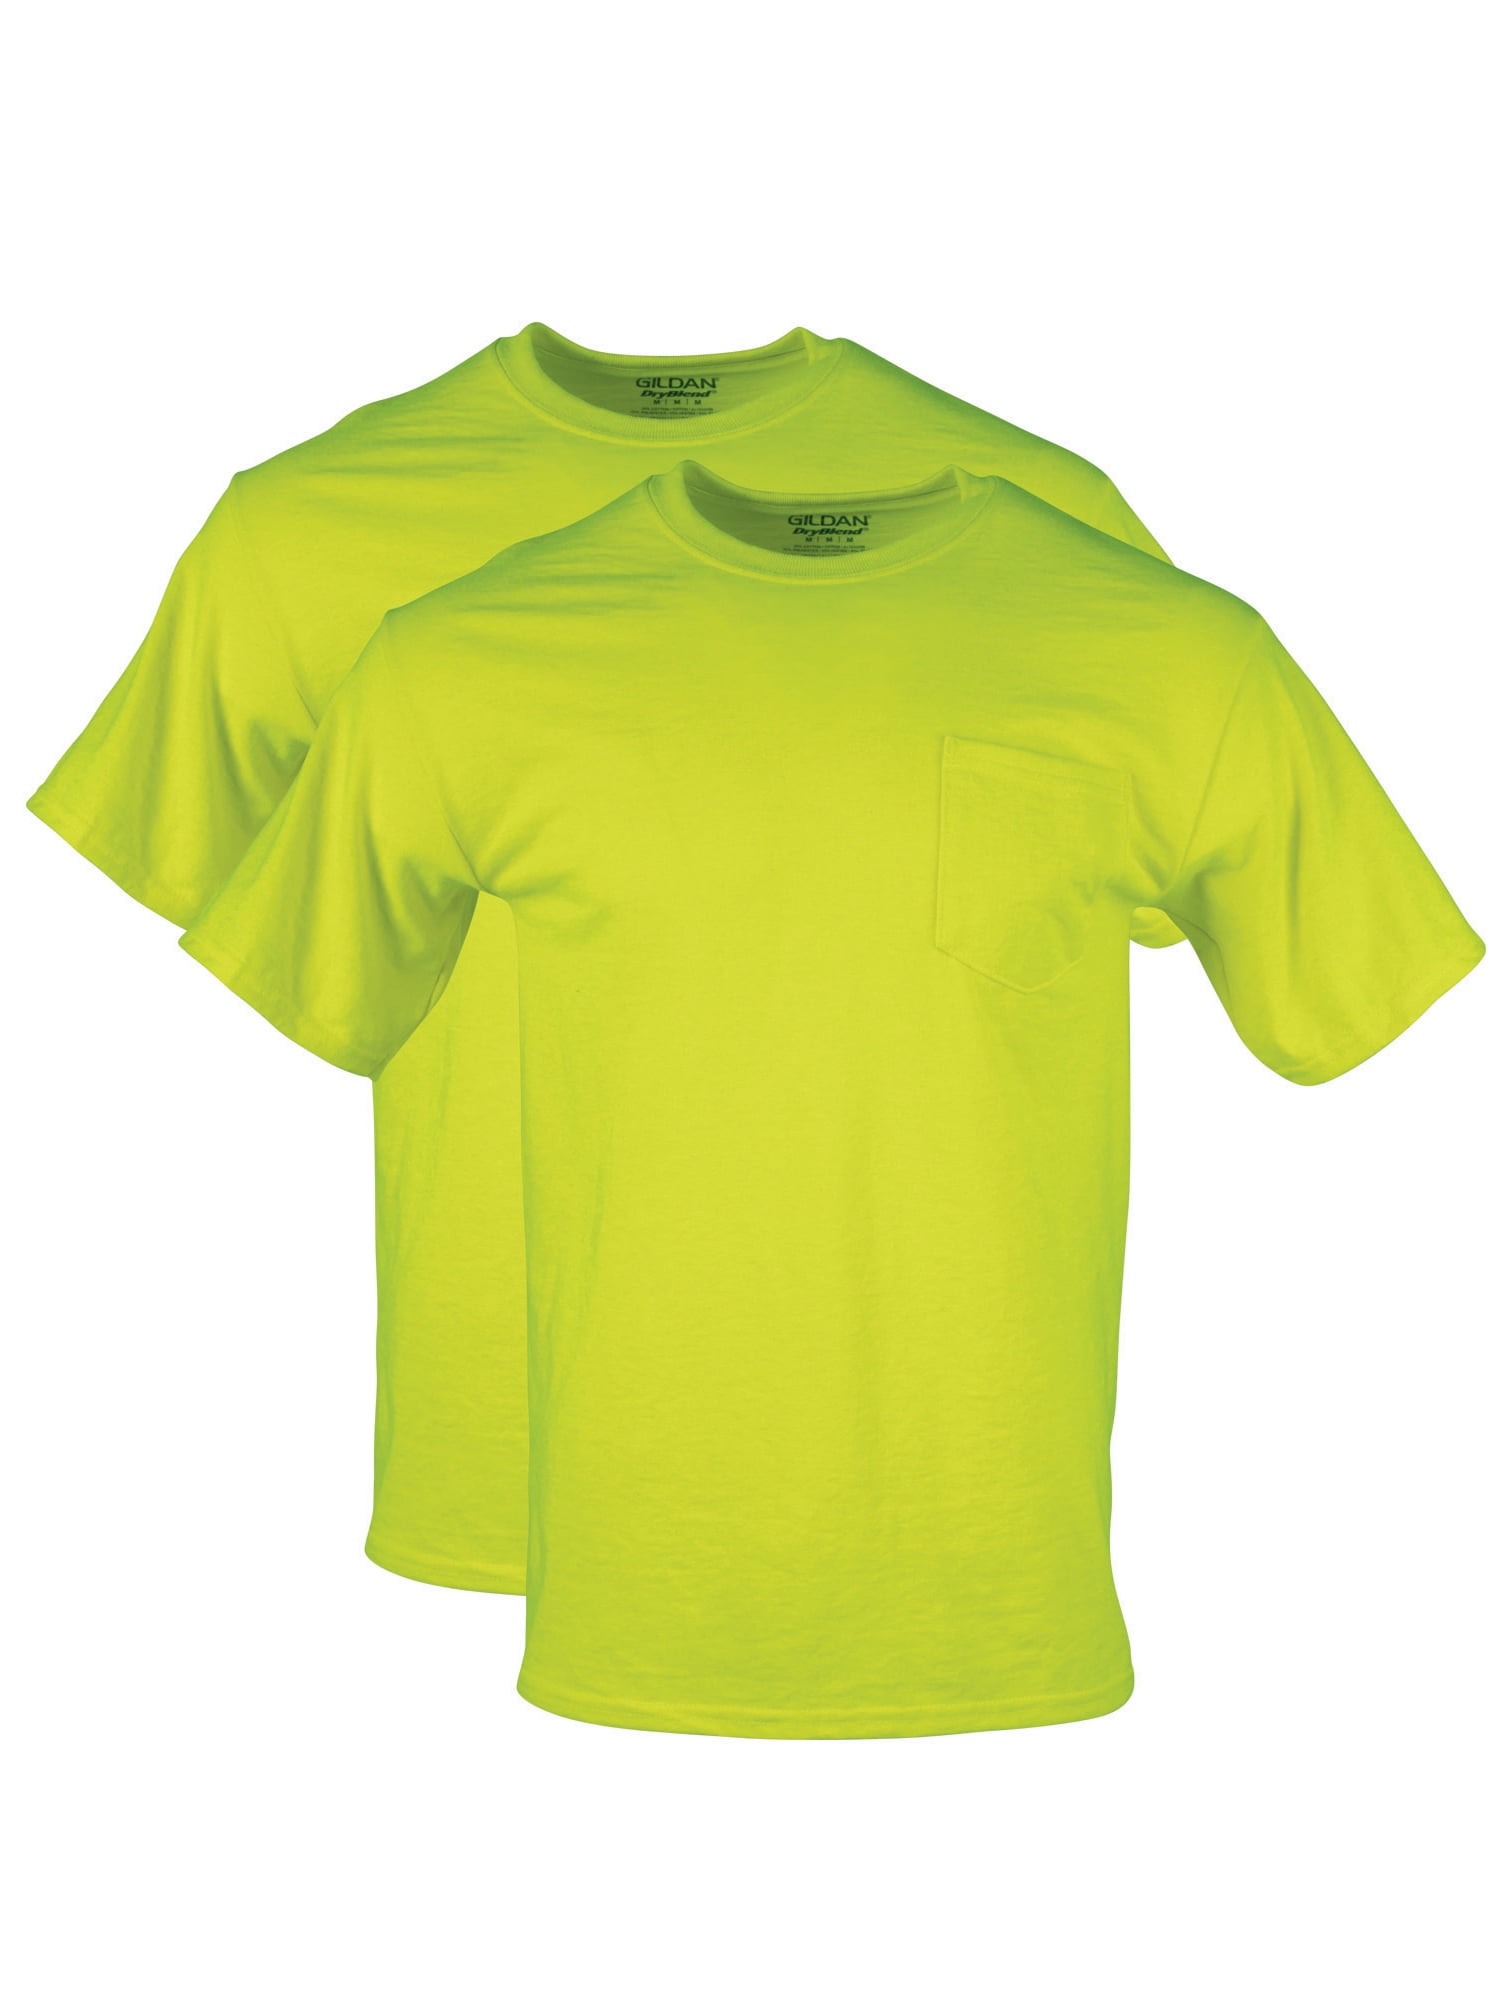 XXLg spring green short sleeve hunting w/pocket t-shirt 